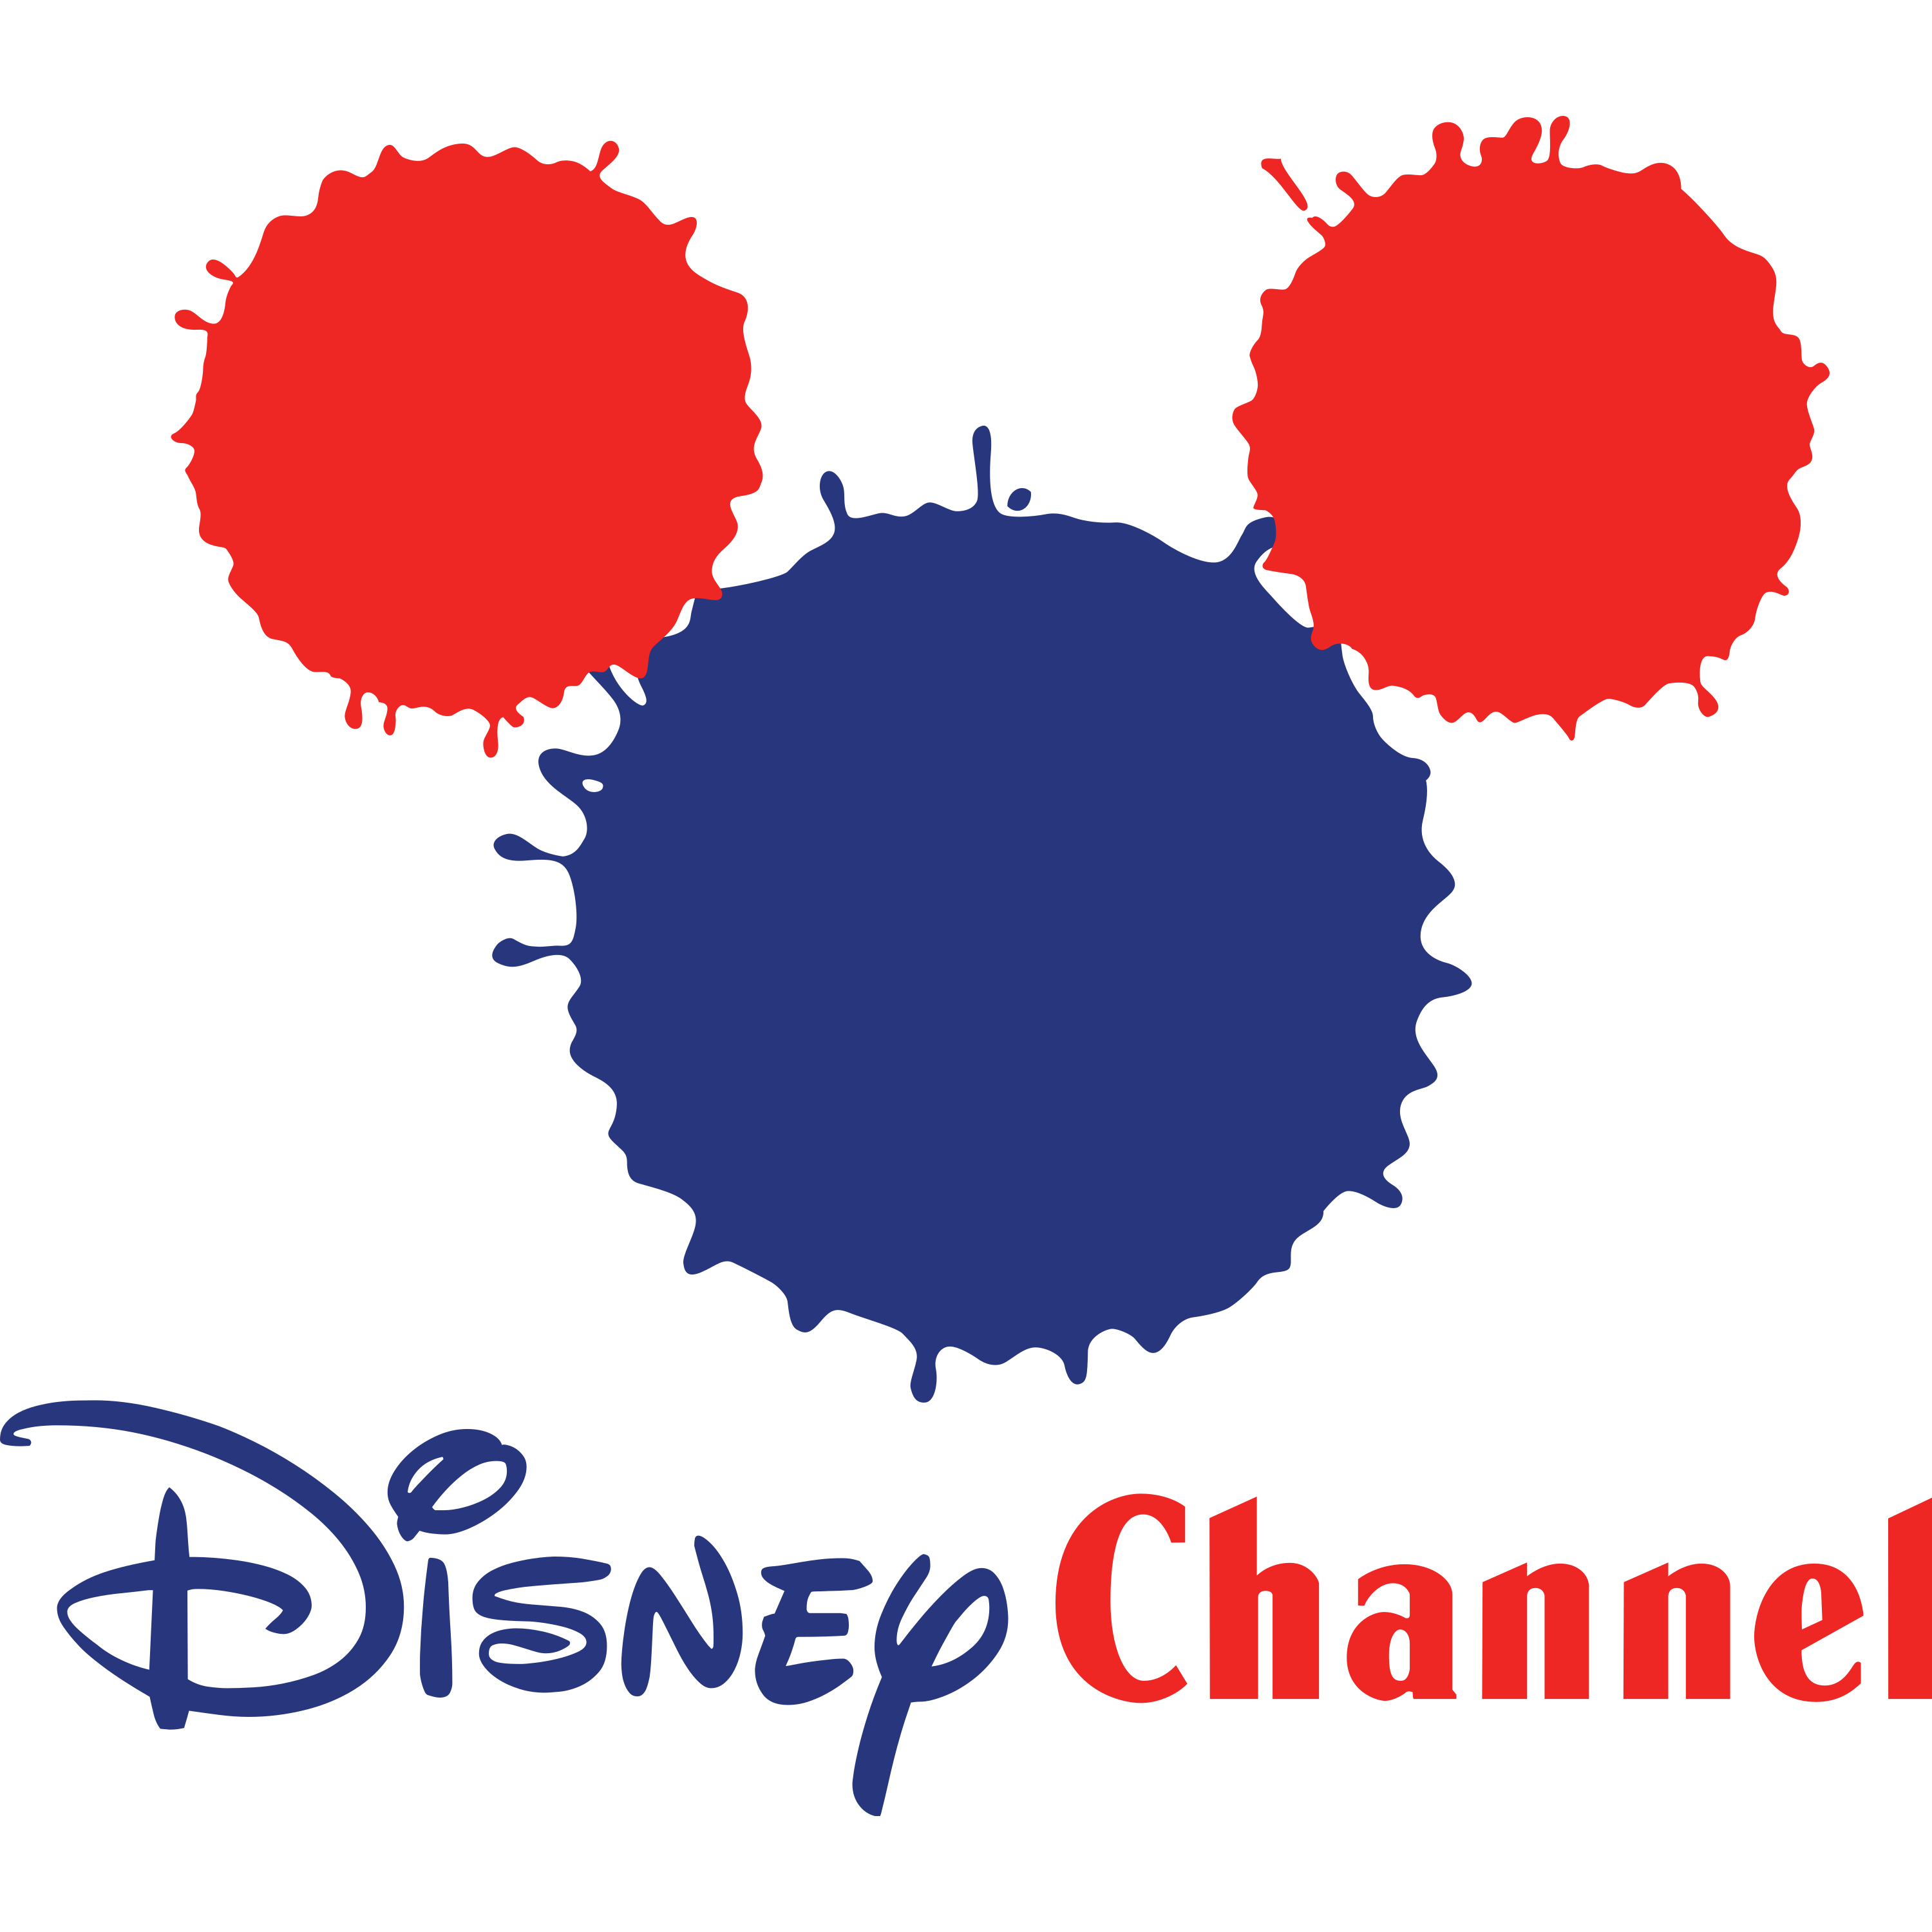 Disney Channel 1997 Logo Transparent Image